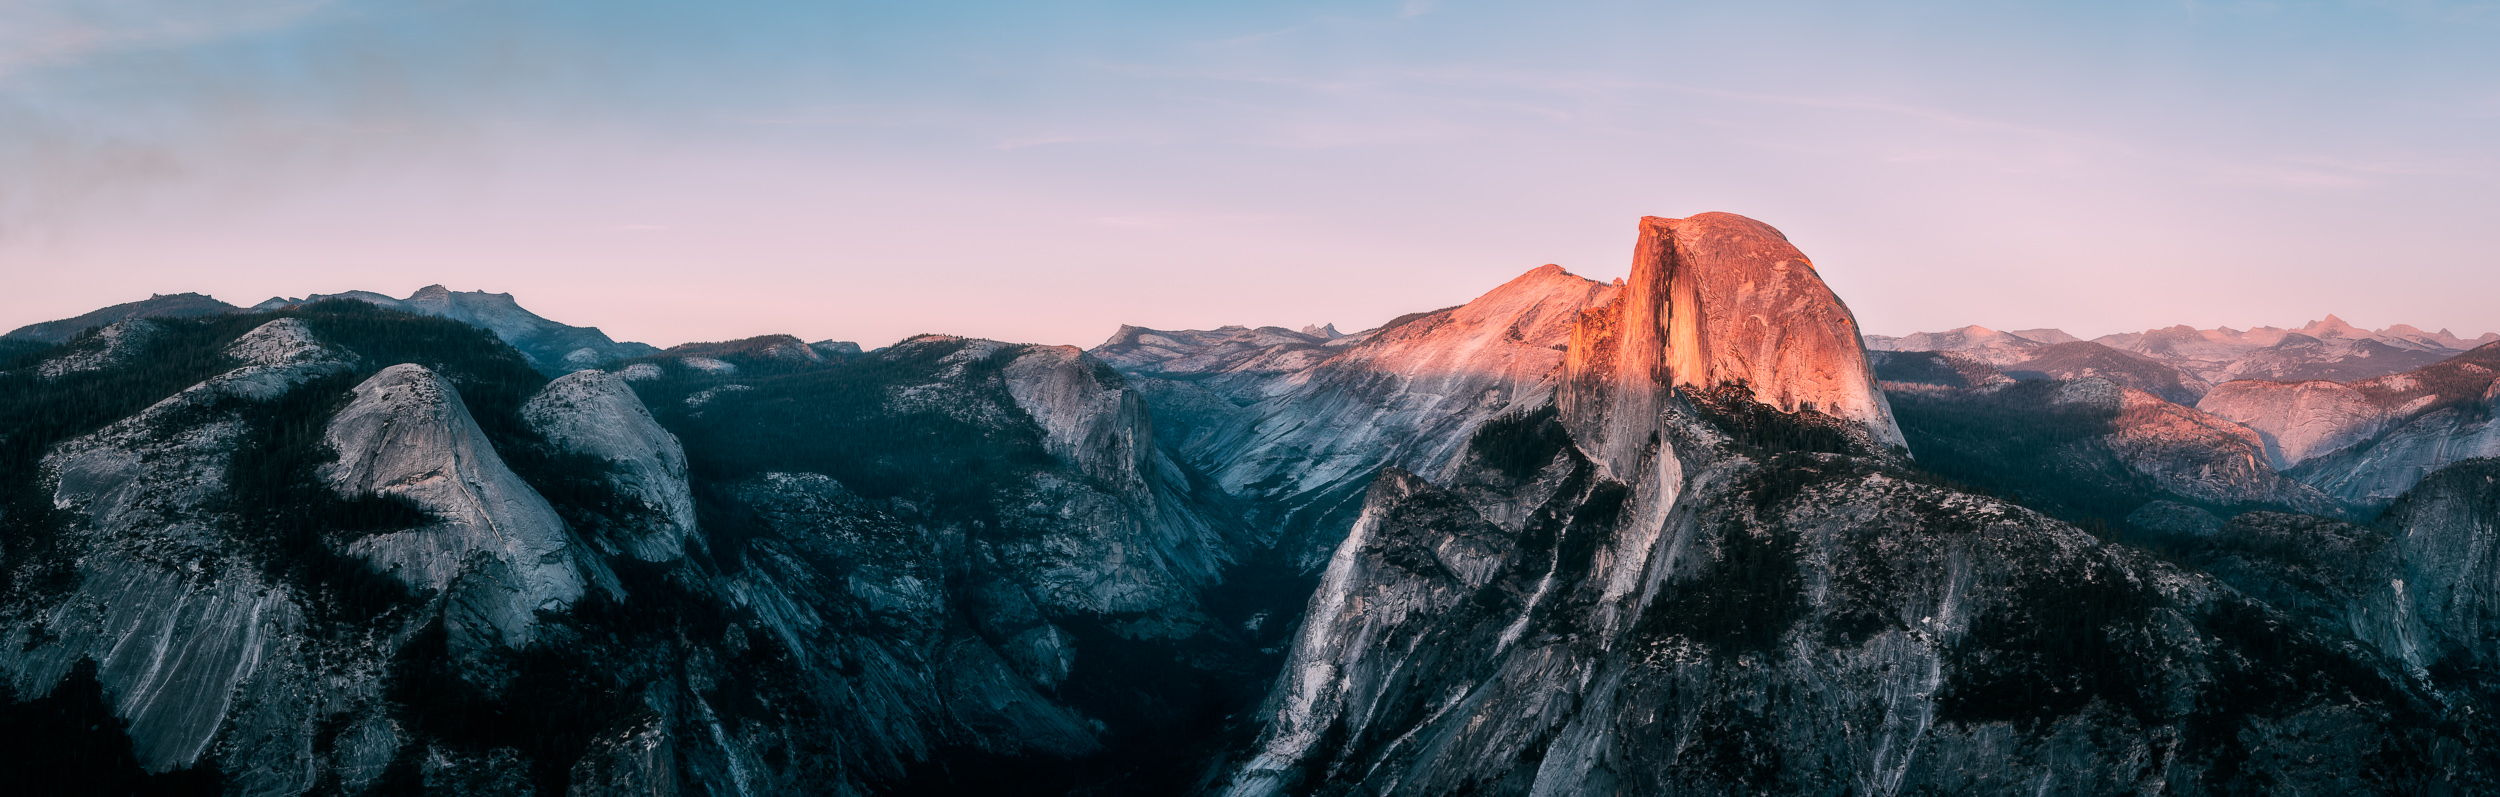 2018.09.26_Yosemite_Day1-6205-Pano-Edit.jpg